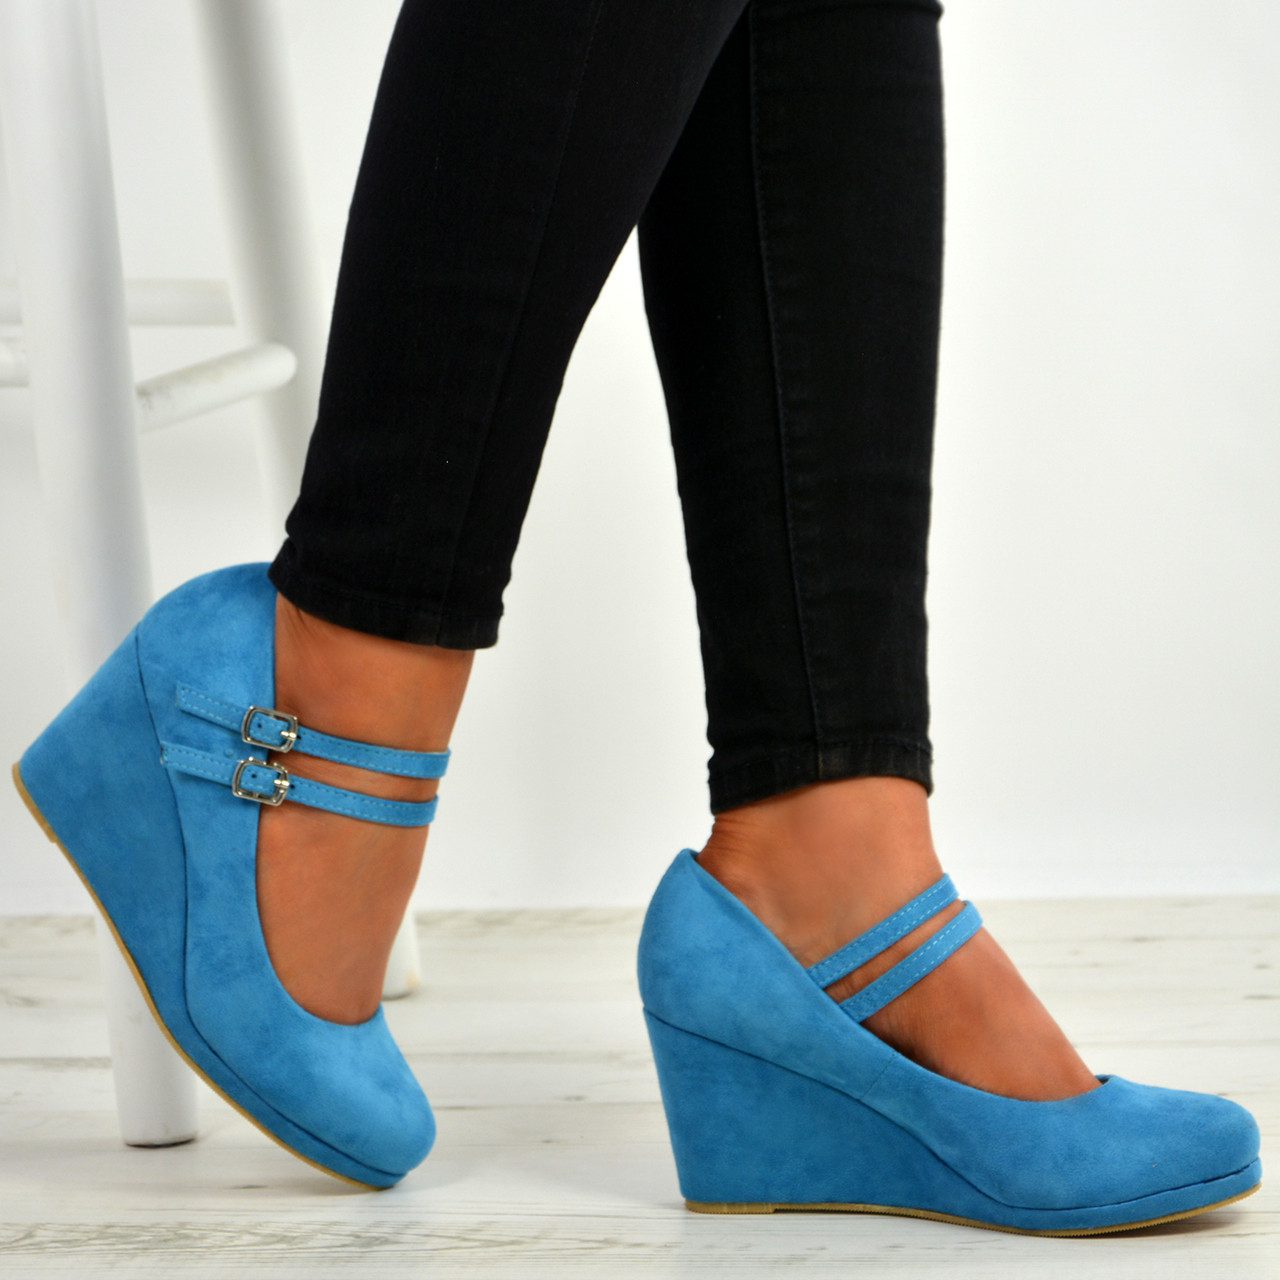 blue wedge dress shoes